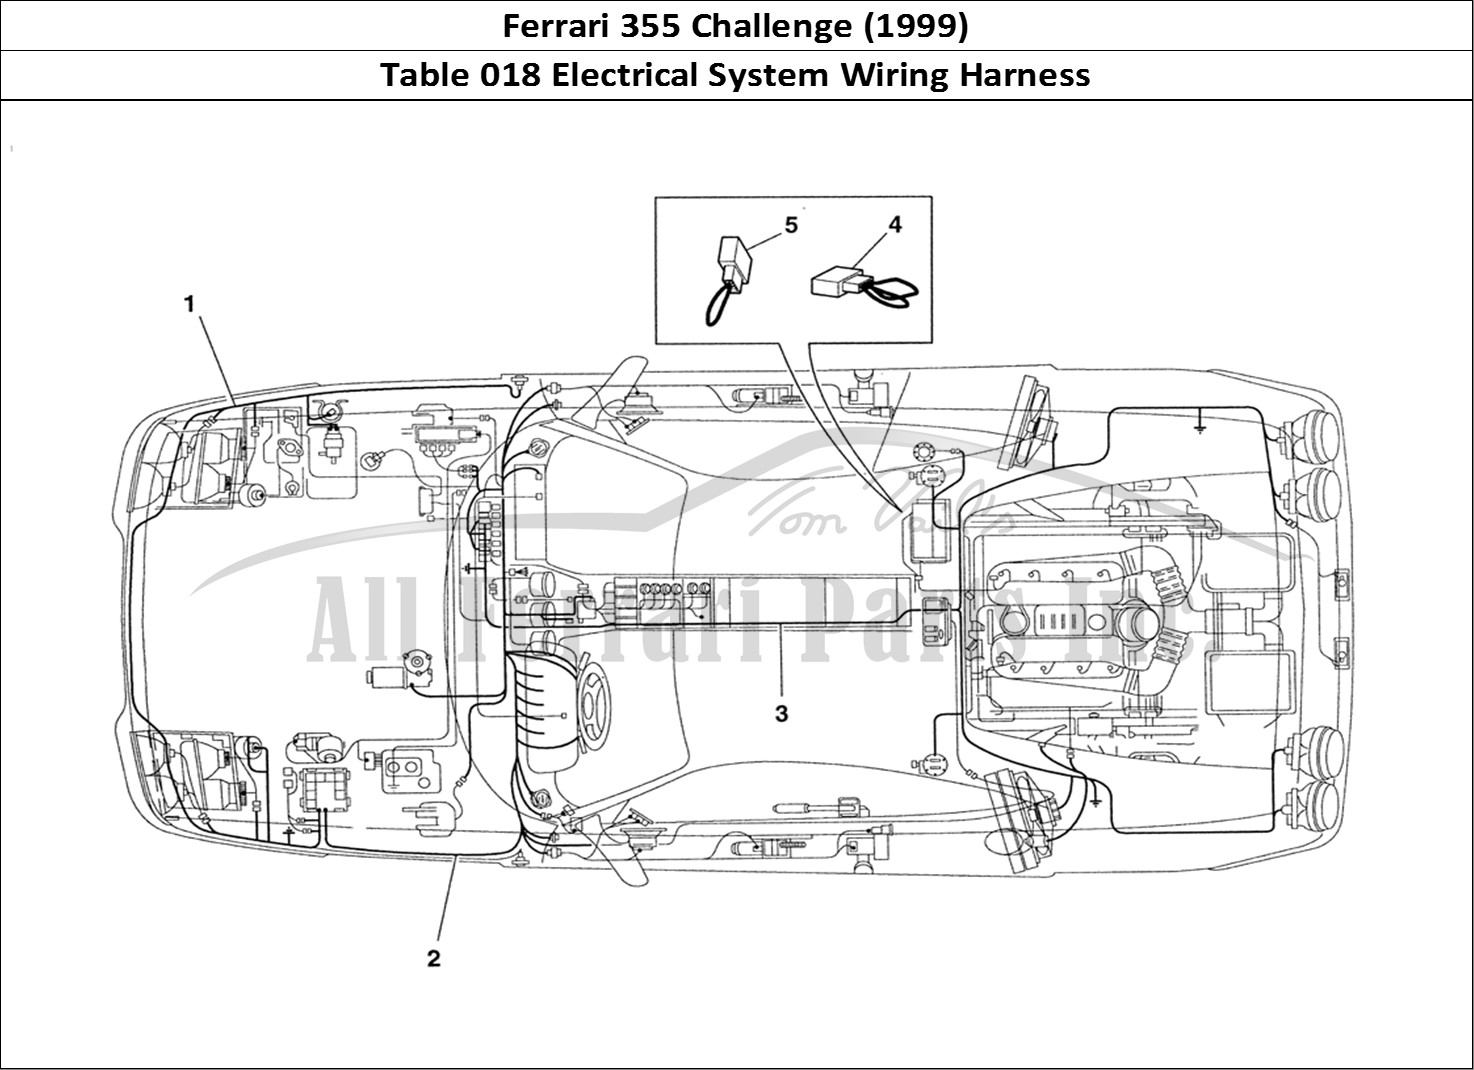 Ferrari Parts Ferrari 355 Challenge (1999) Page 018 Electrical System